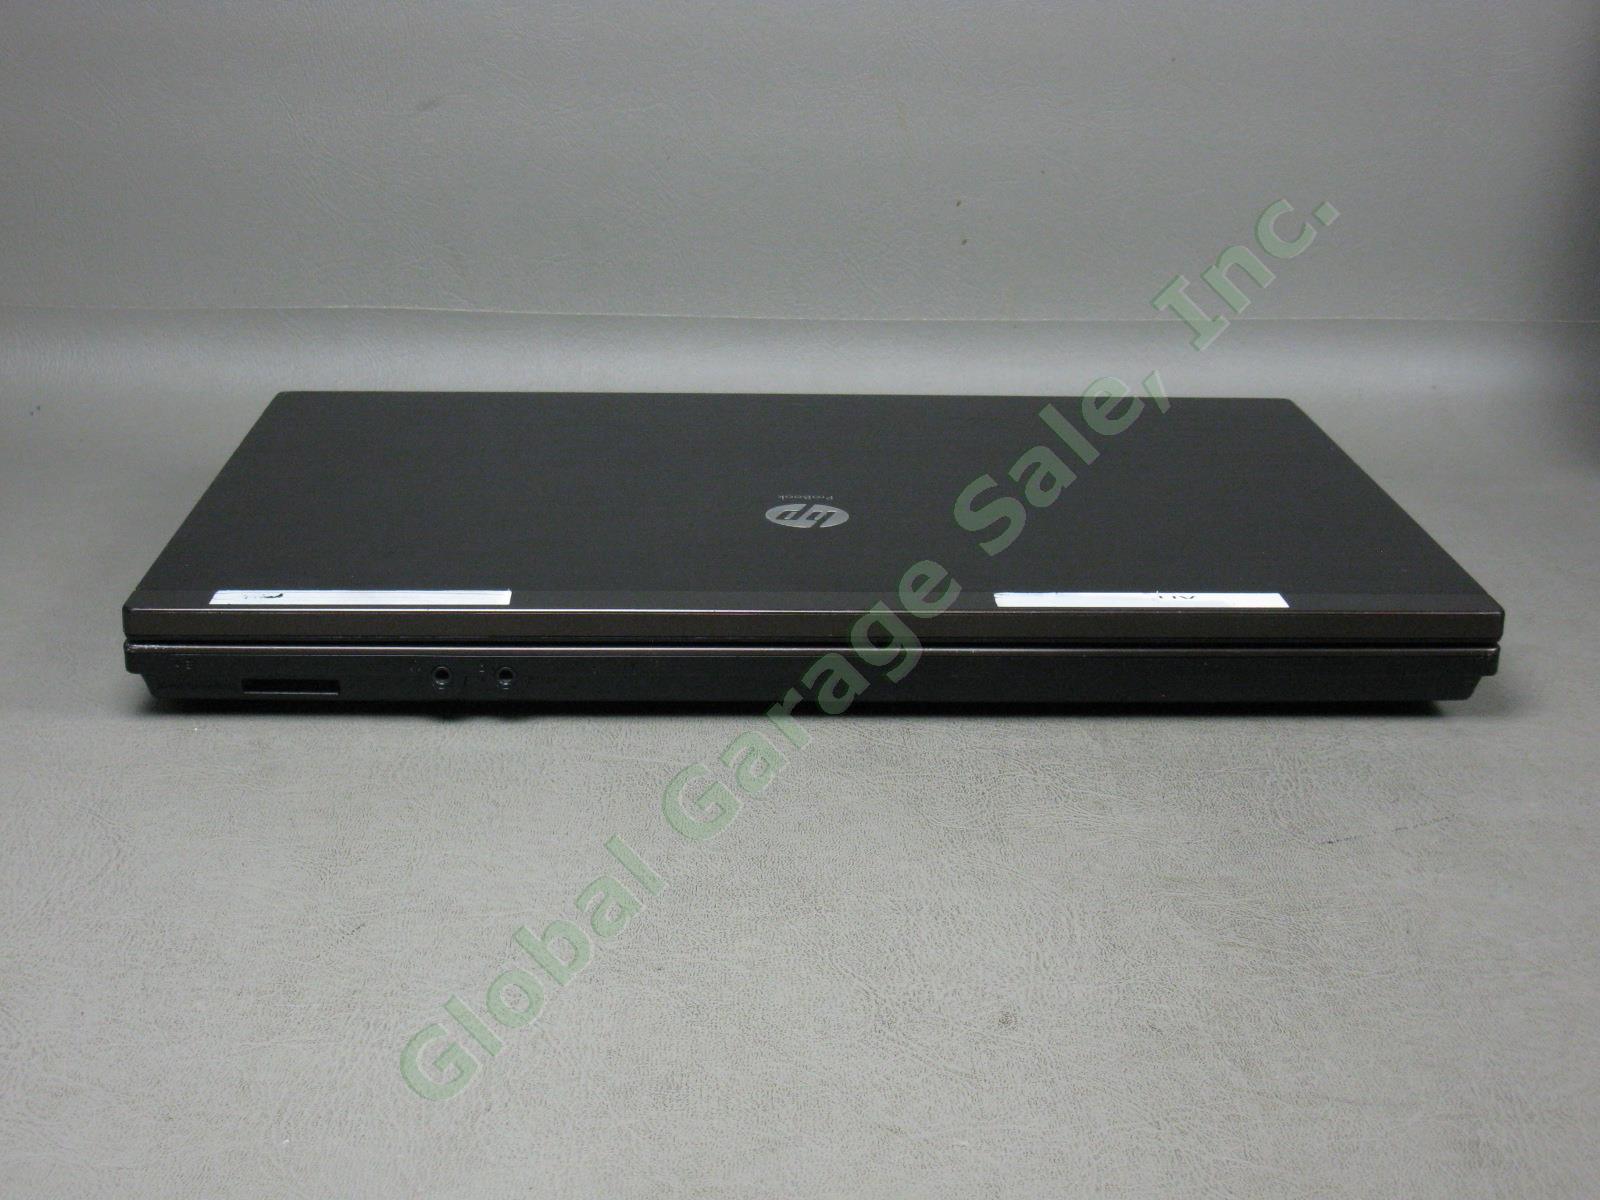 HP 4520s Laptop Computer Intel Core i5 2.67GHz 2GB 500GB HDD Windows 7 Pro NR! 5